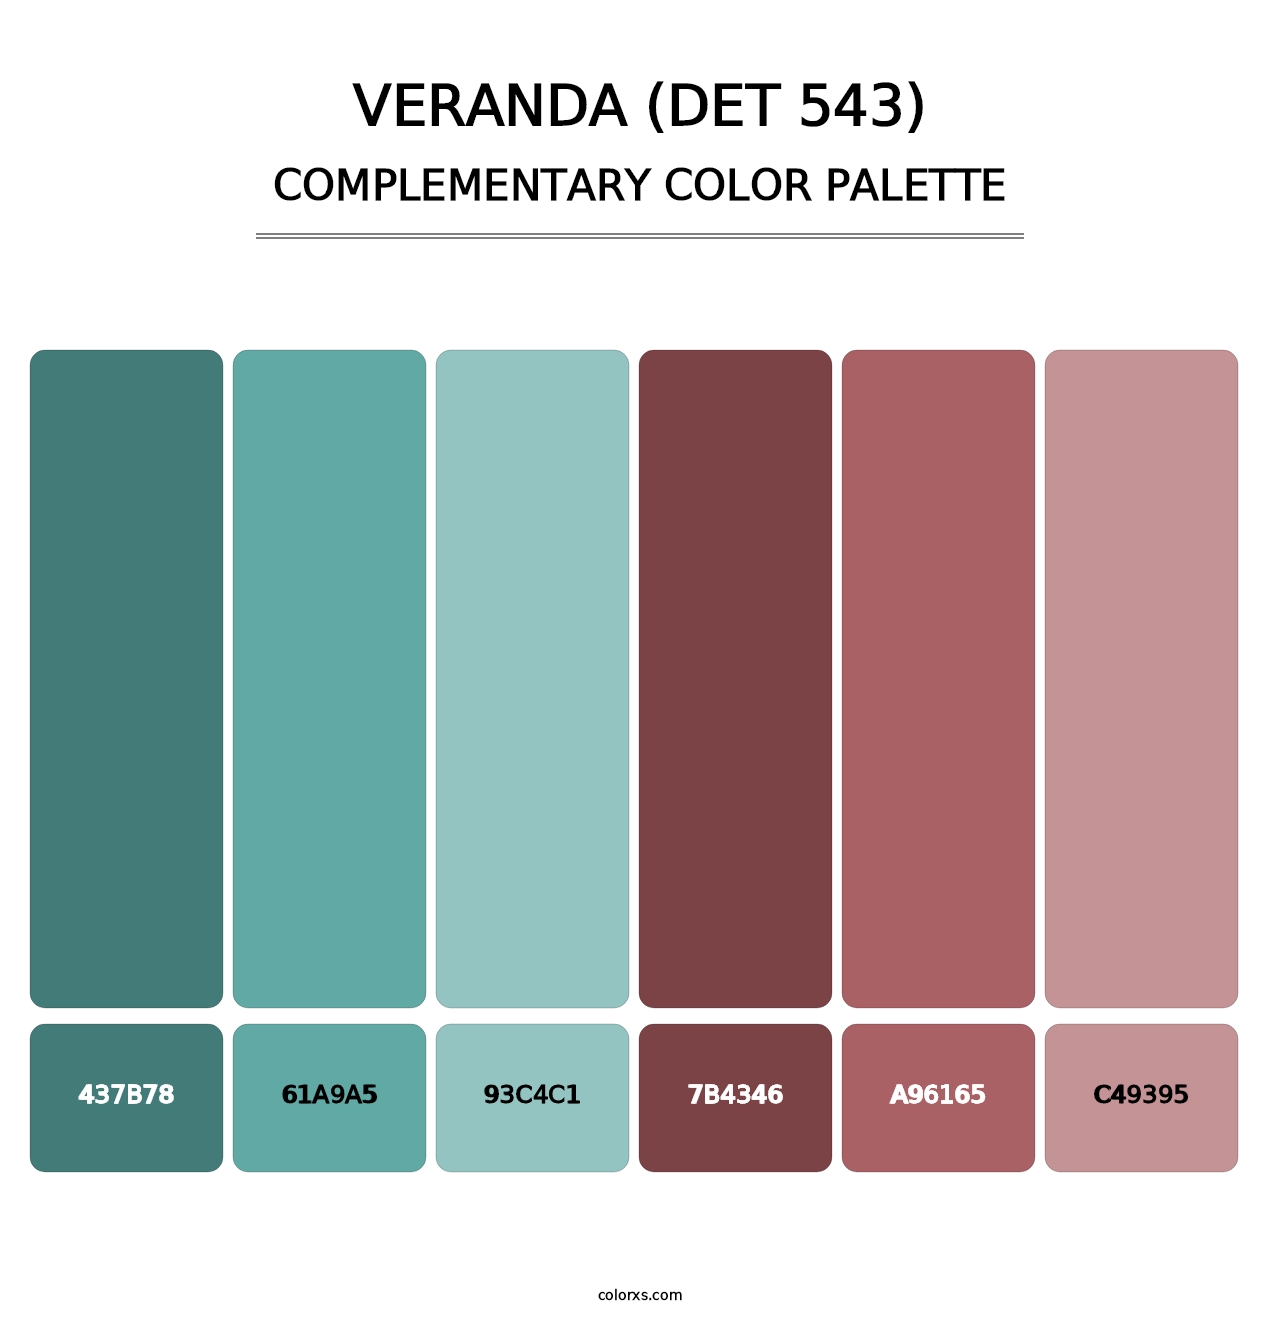 Veranda (DET 543) - Complementary Color Palette